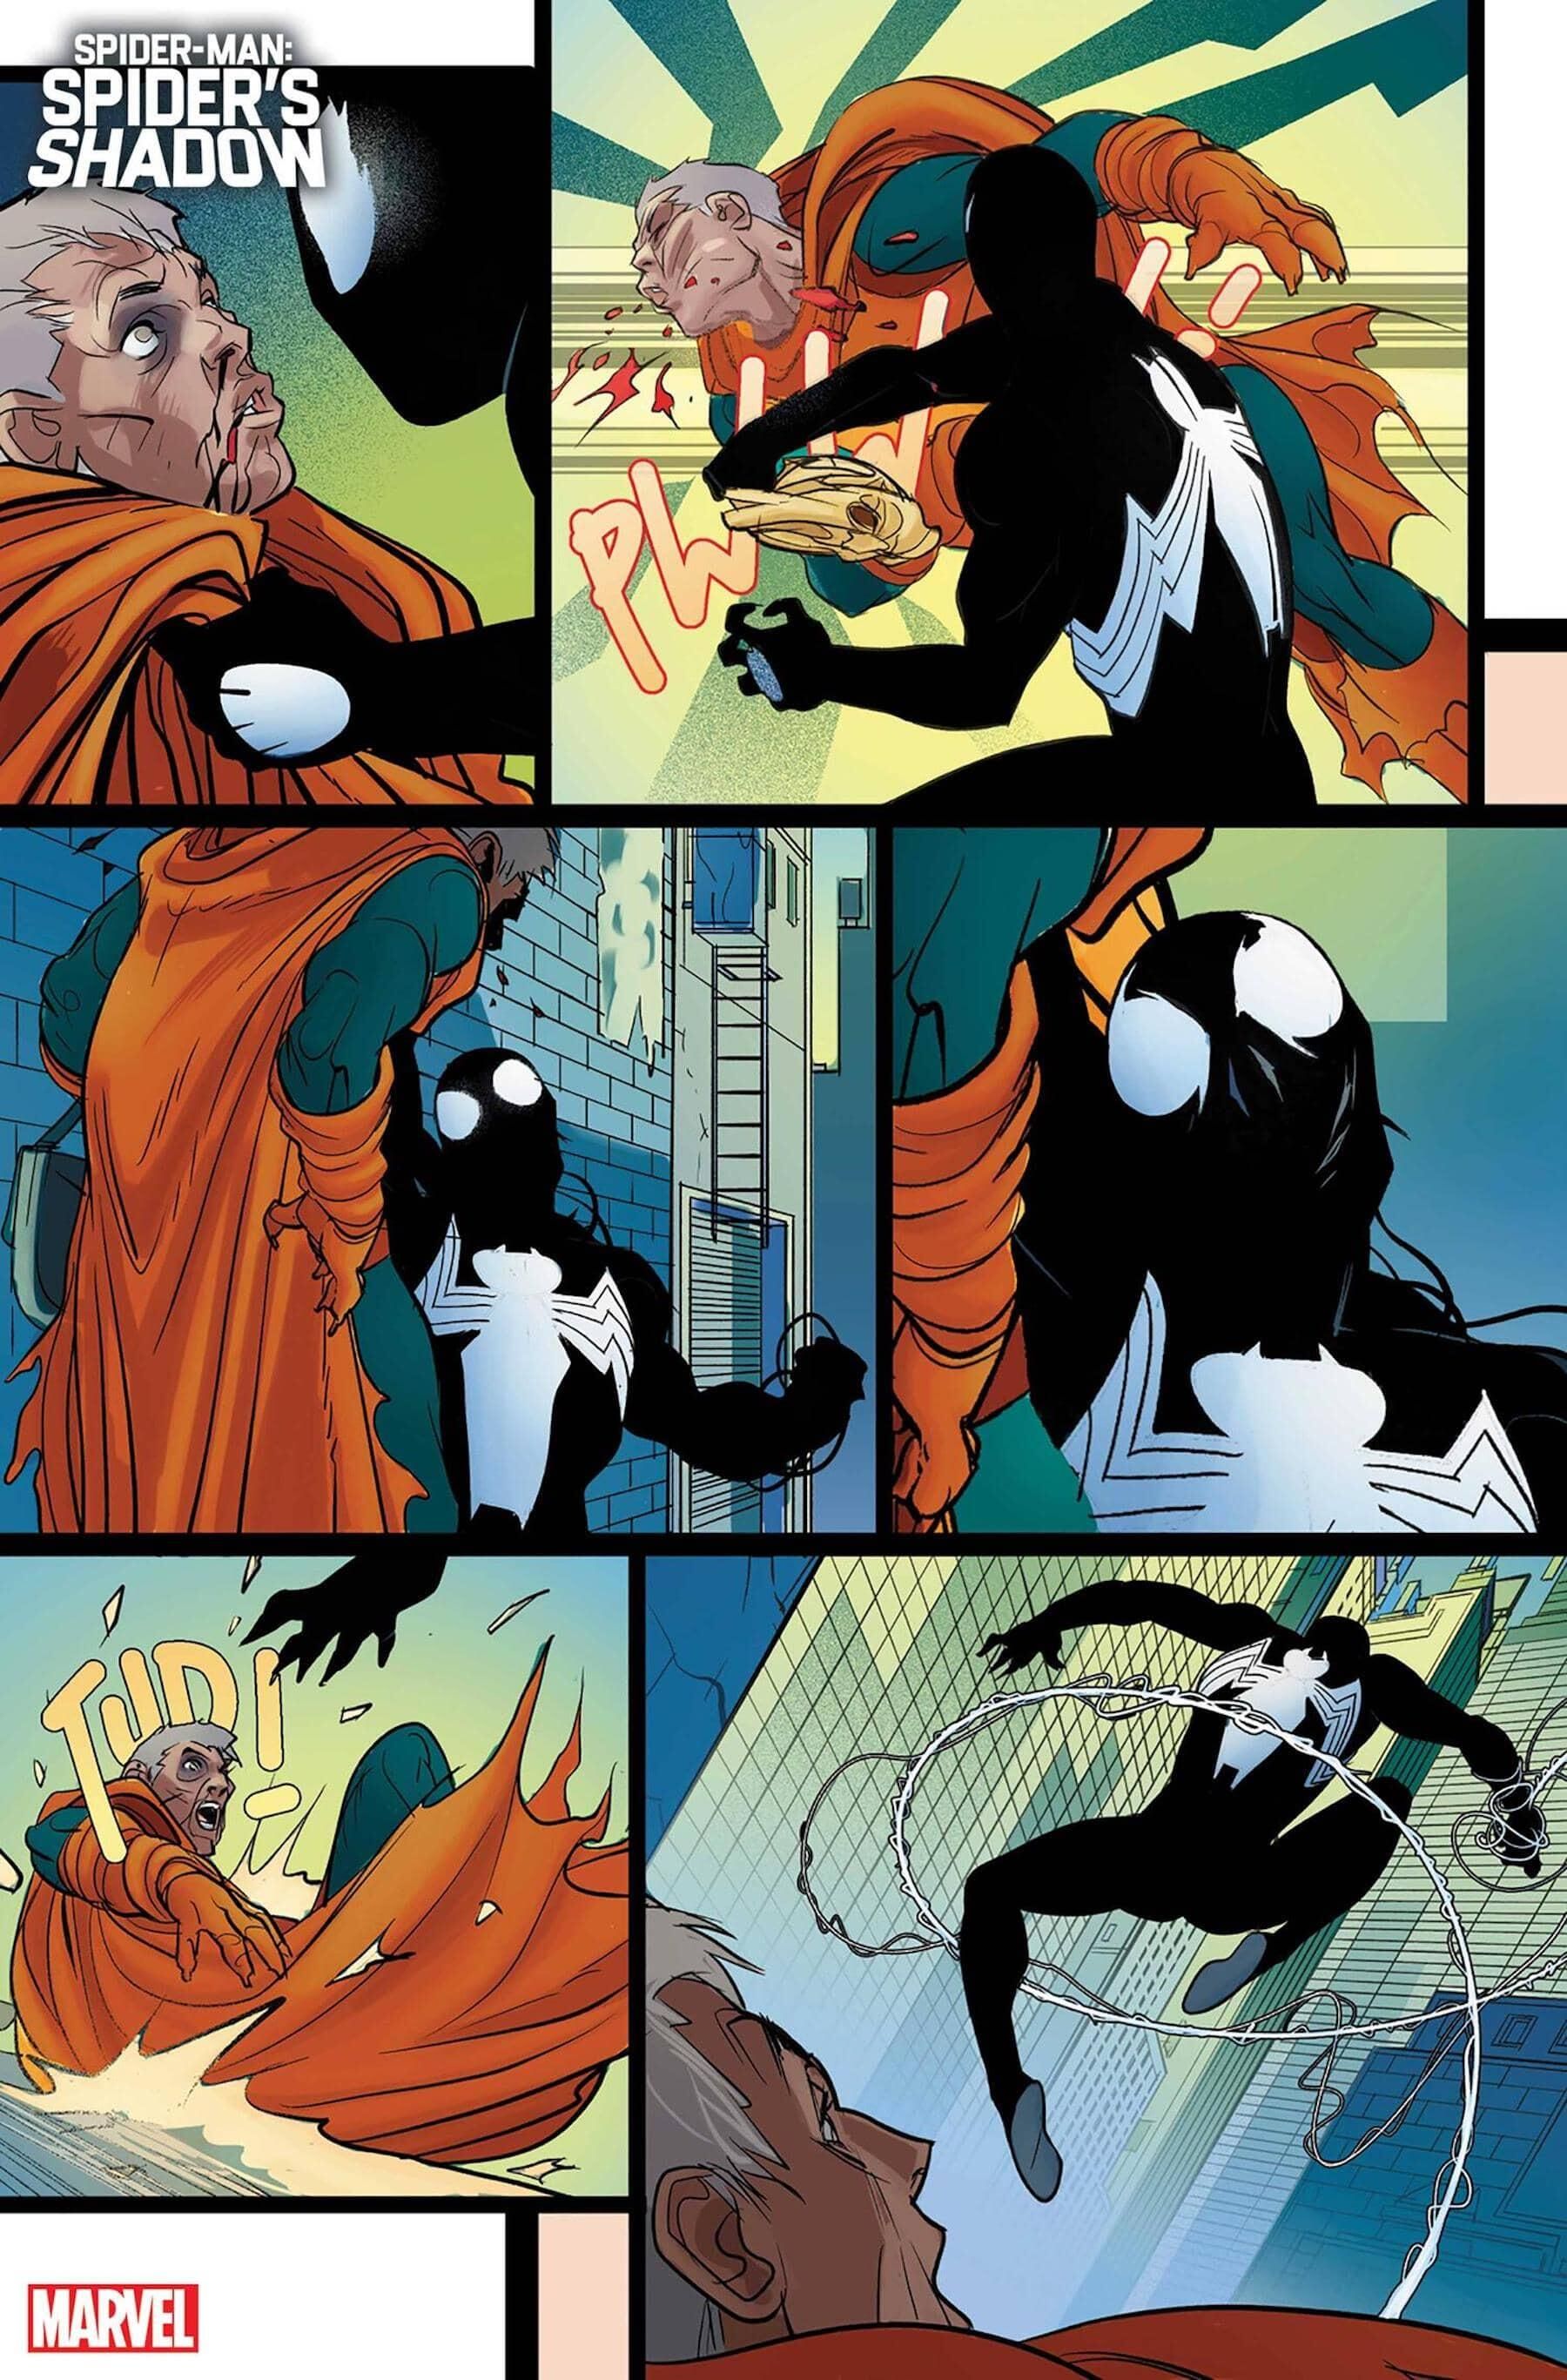 SpiderMan Goes Full Venom In New Marvel Comics Series